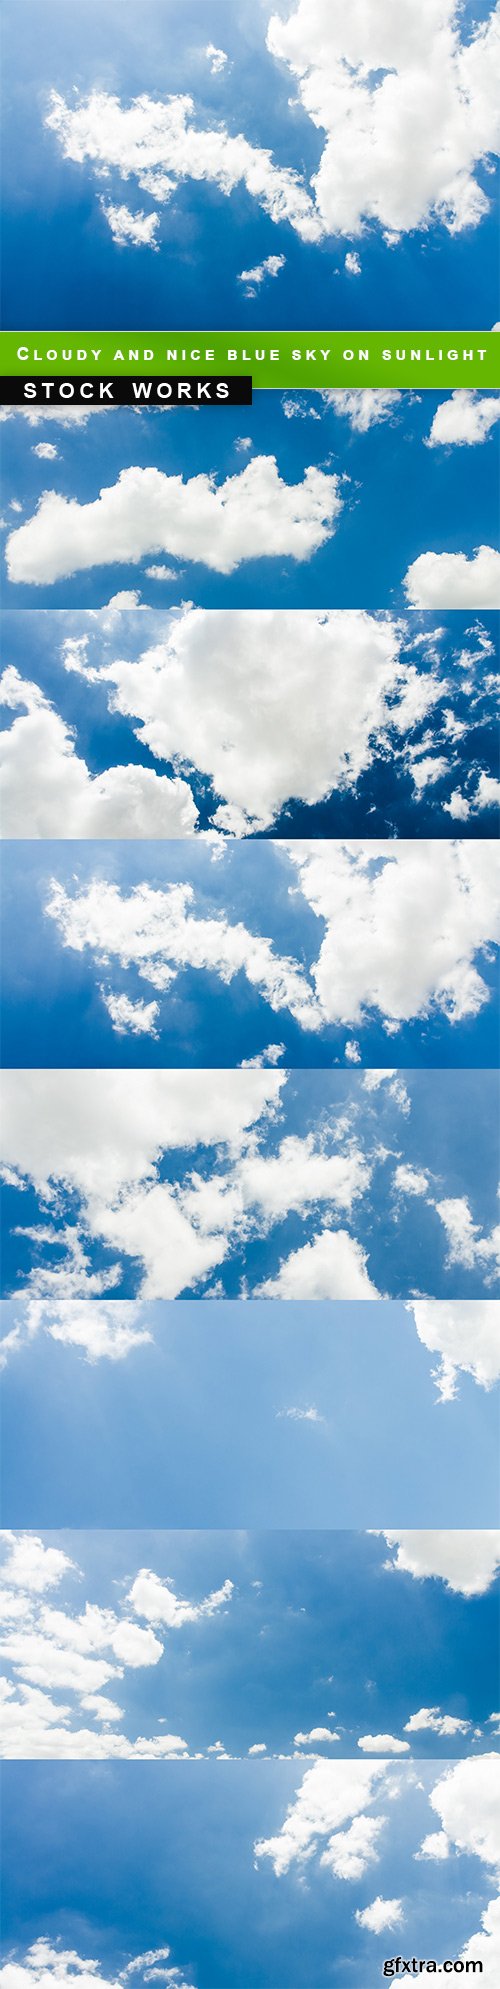 Cloudy and nice blue sky on sunlight - 7 UHQ JPEG